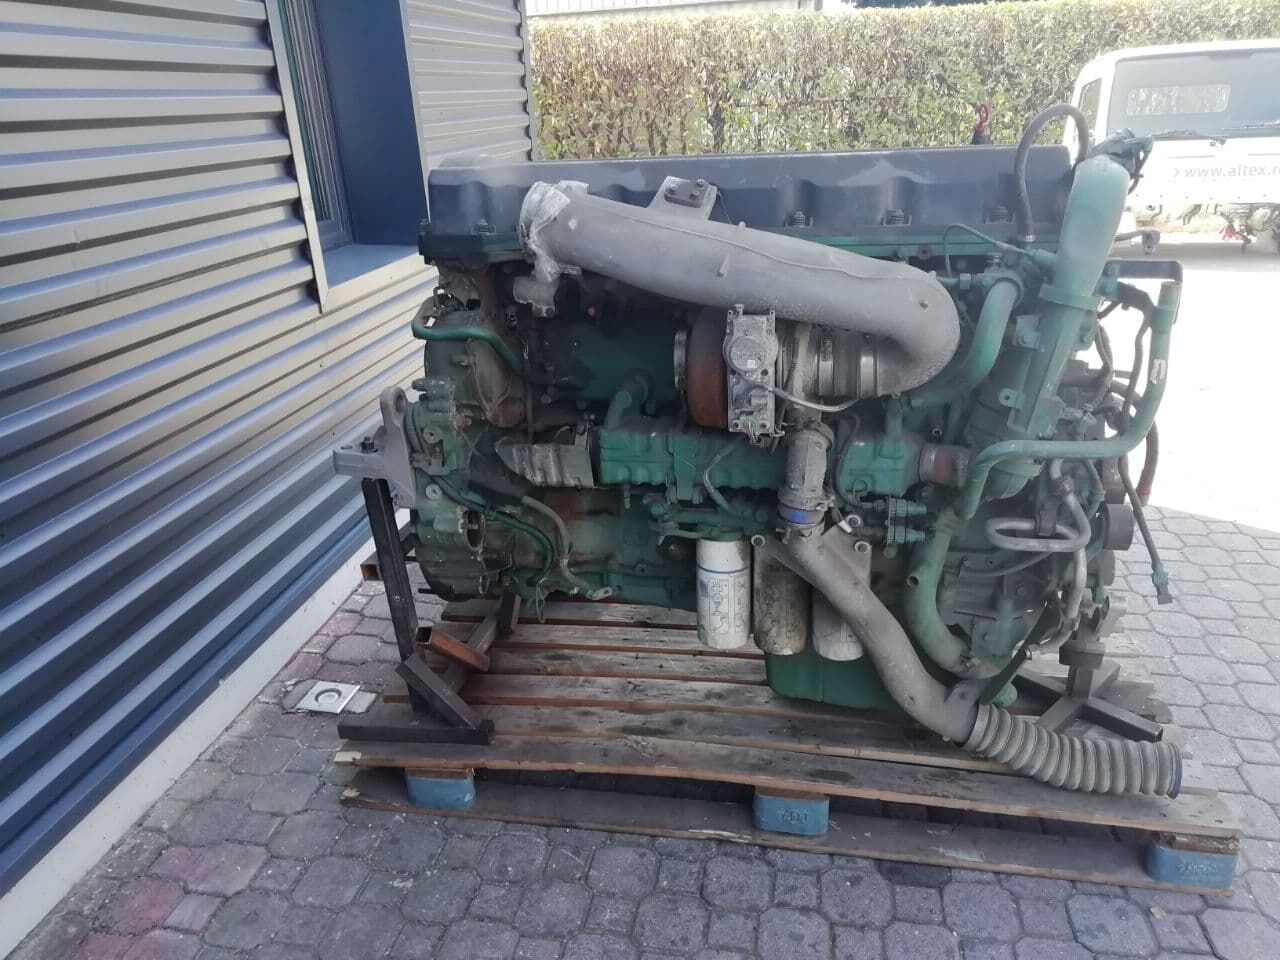 motore RENAULT DXI13 - DXI 13 520 hp per camion RENAULT MAGNUM EURO 5 E5